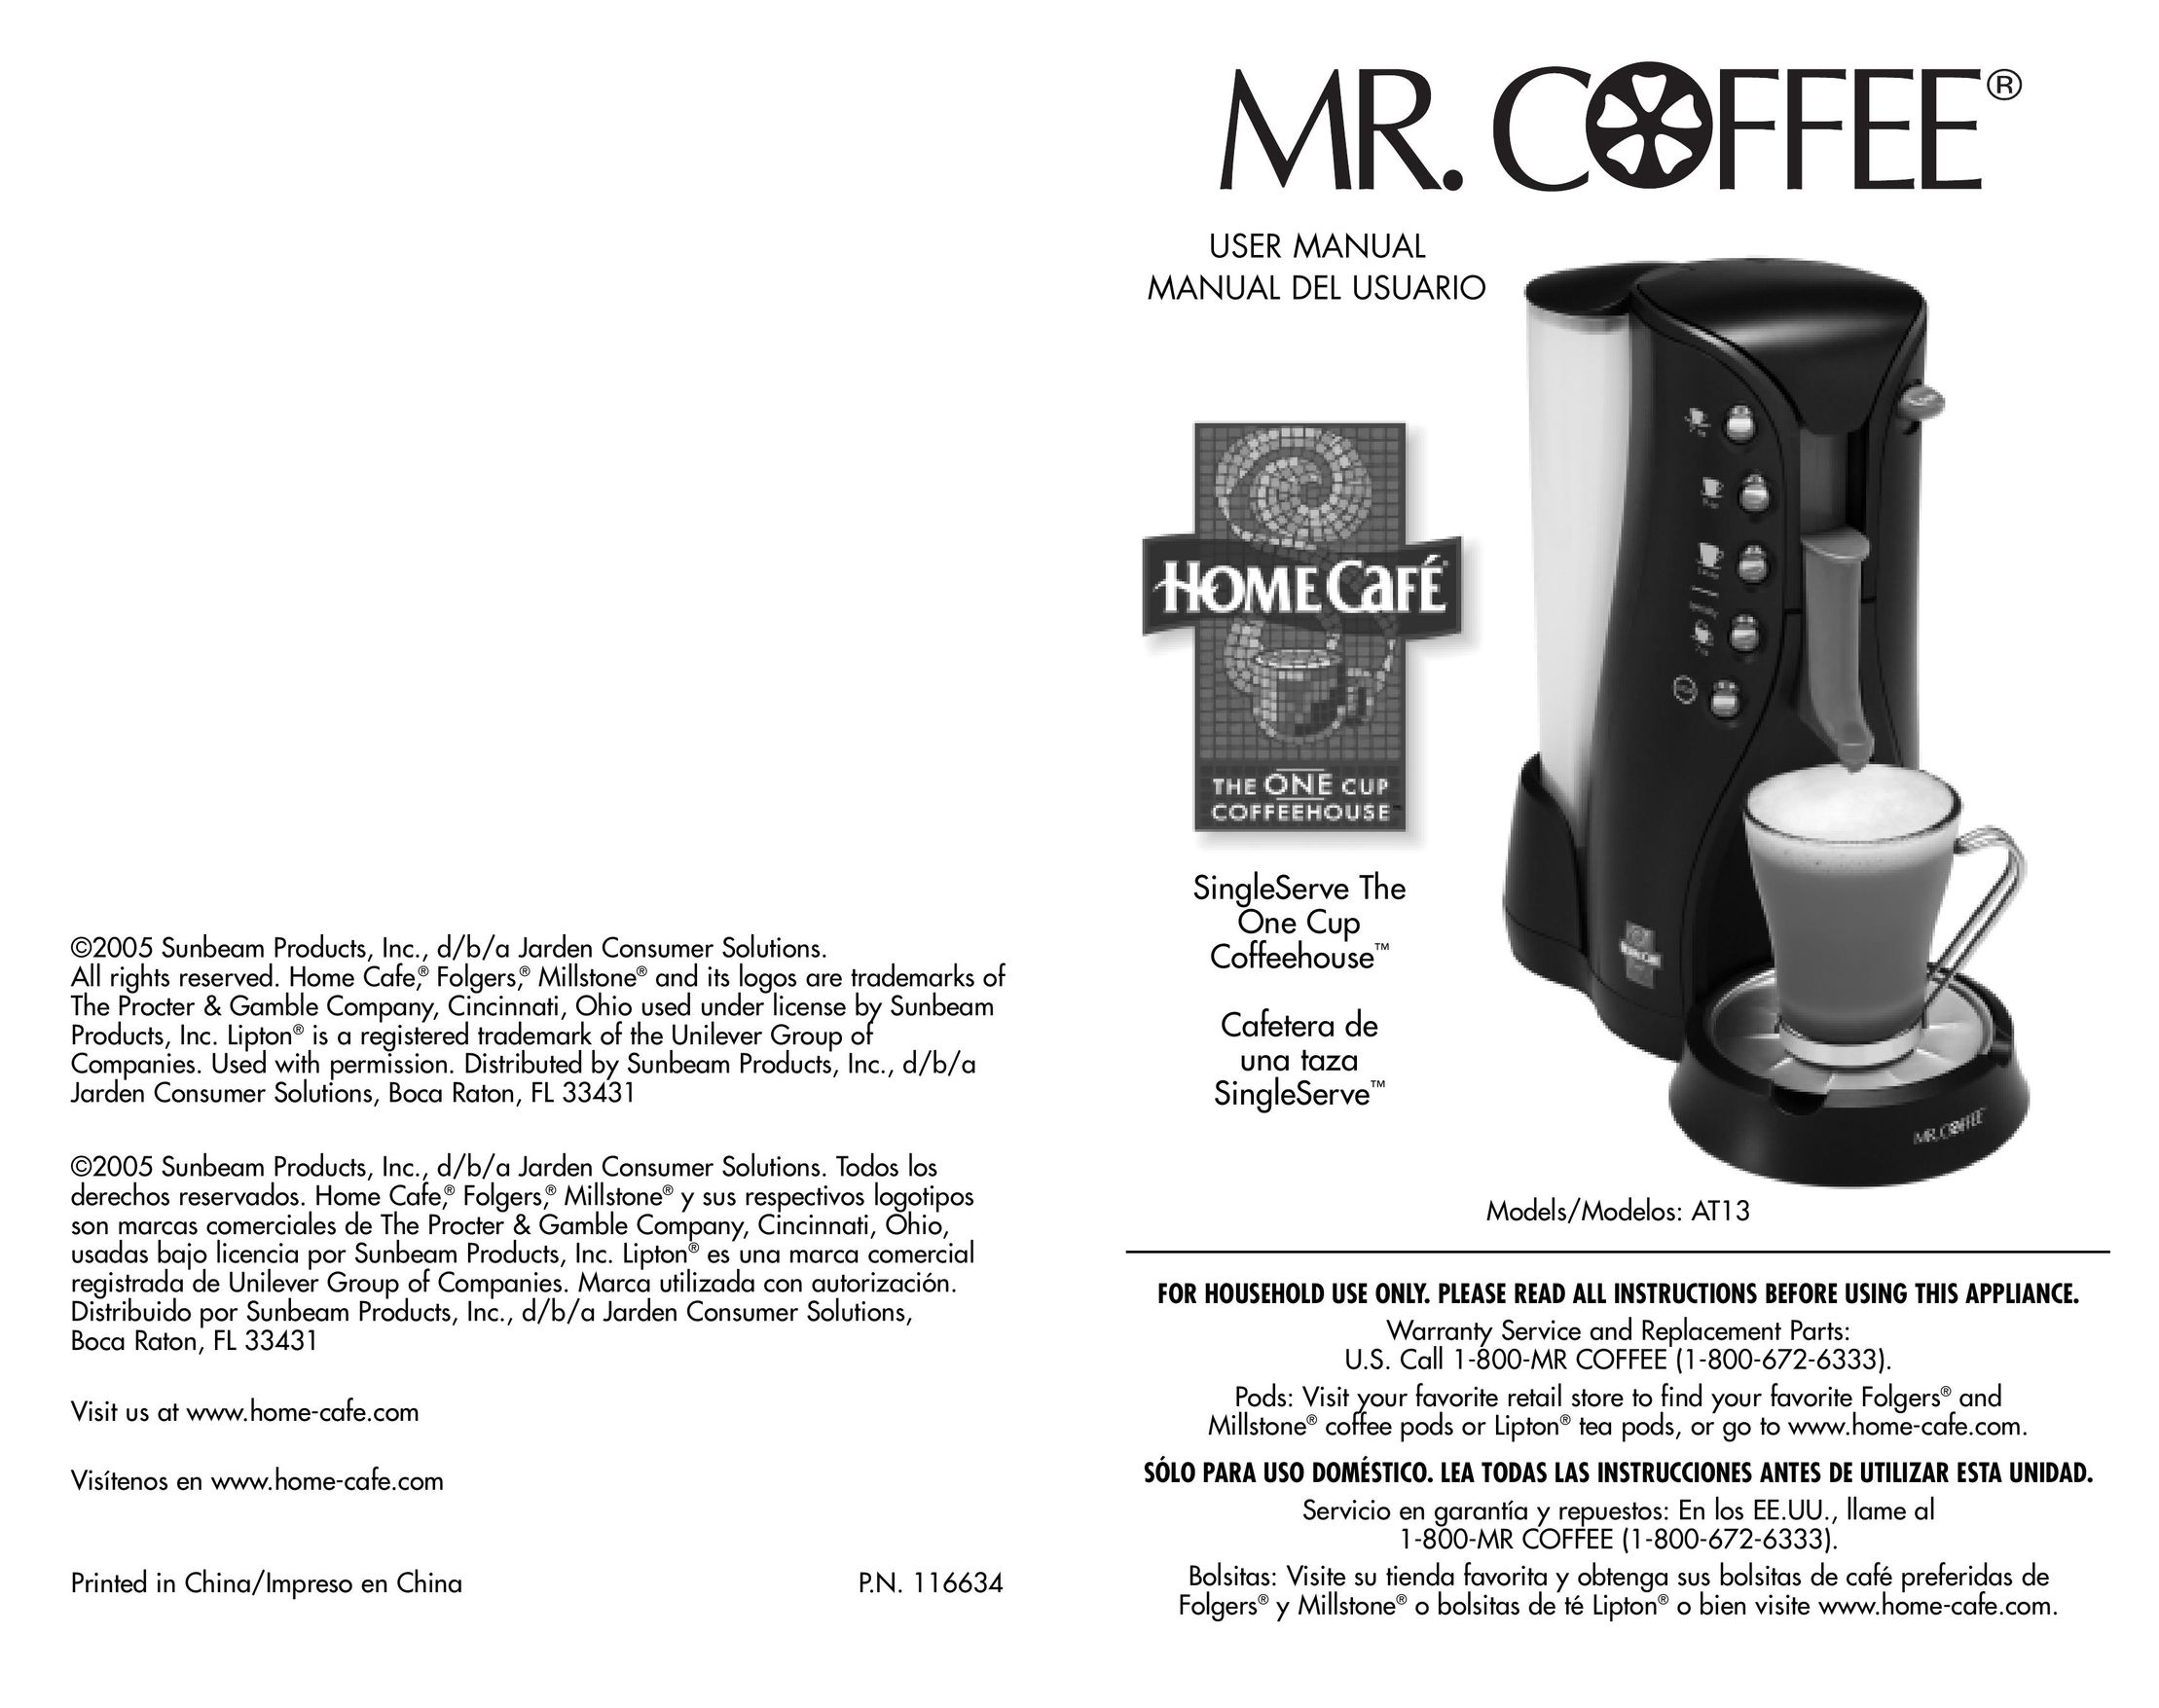 Mr. Coffee AT13 Coffeemaker User Manual